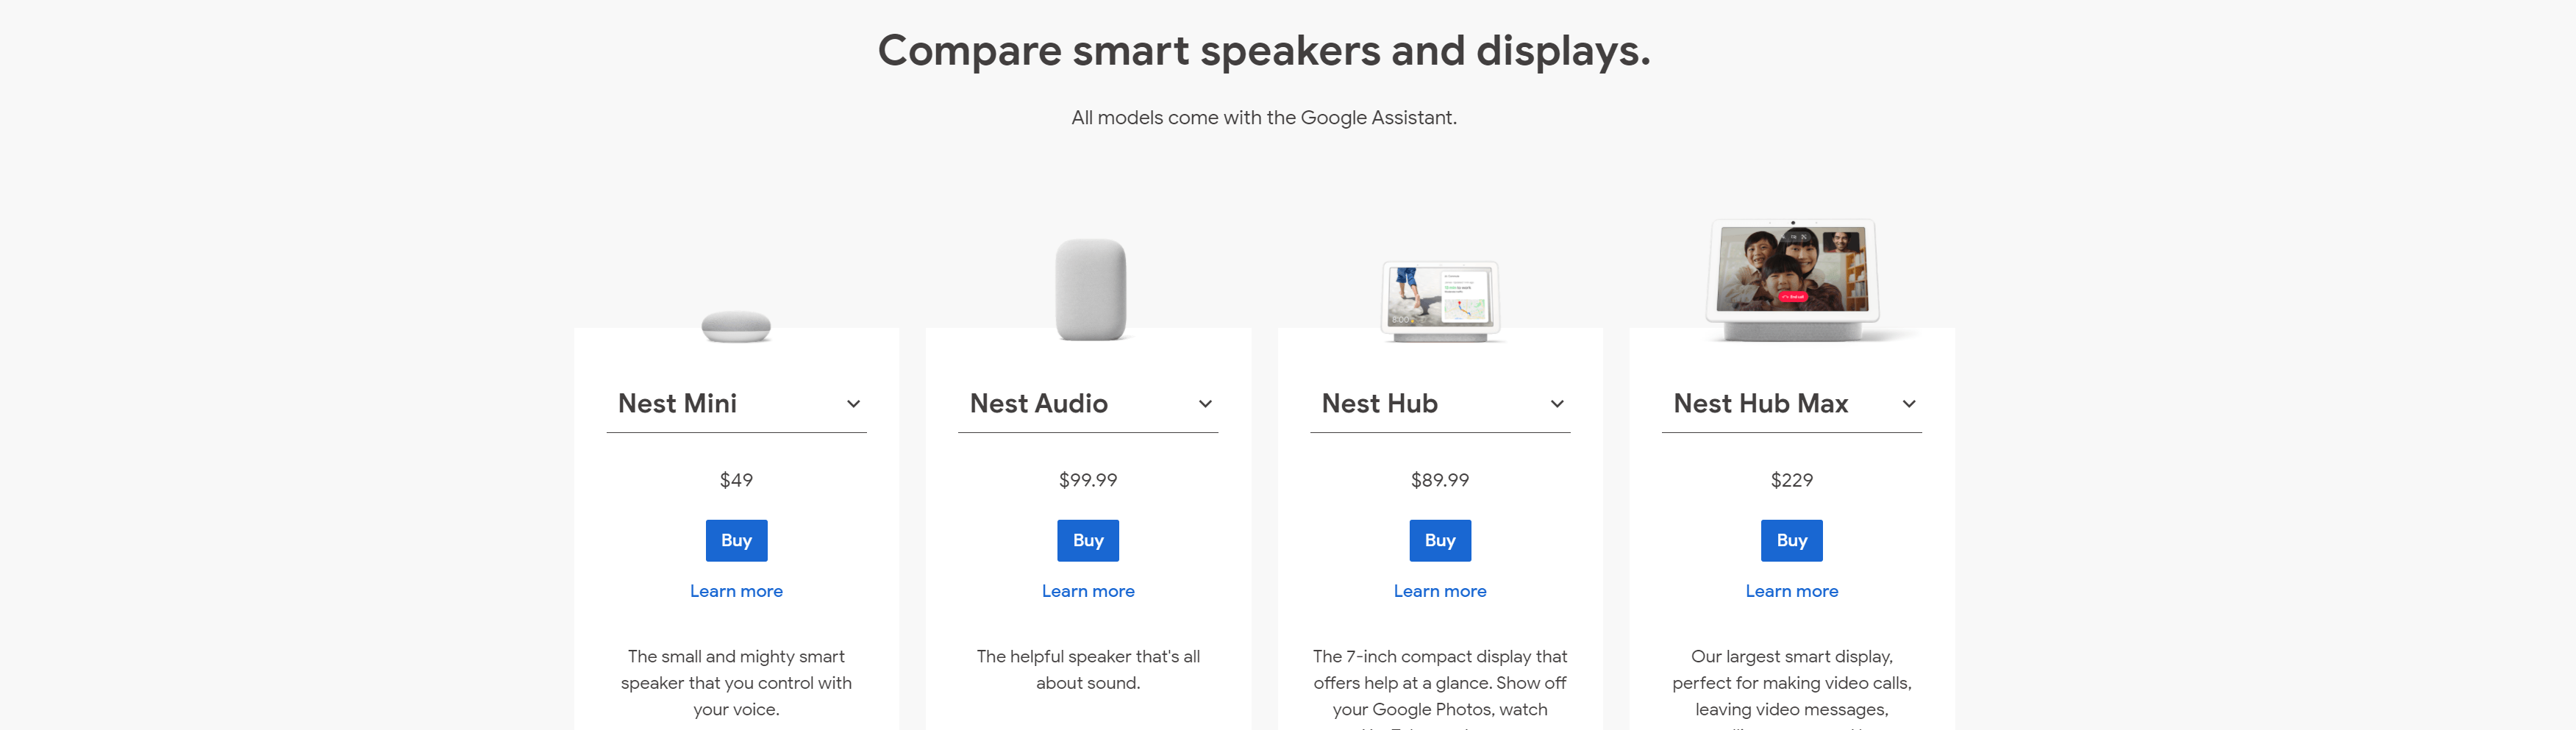 Google smart speakers